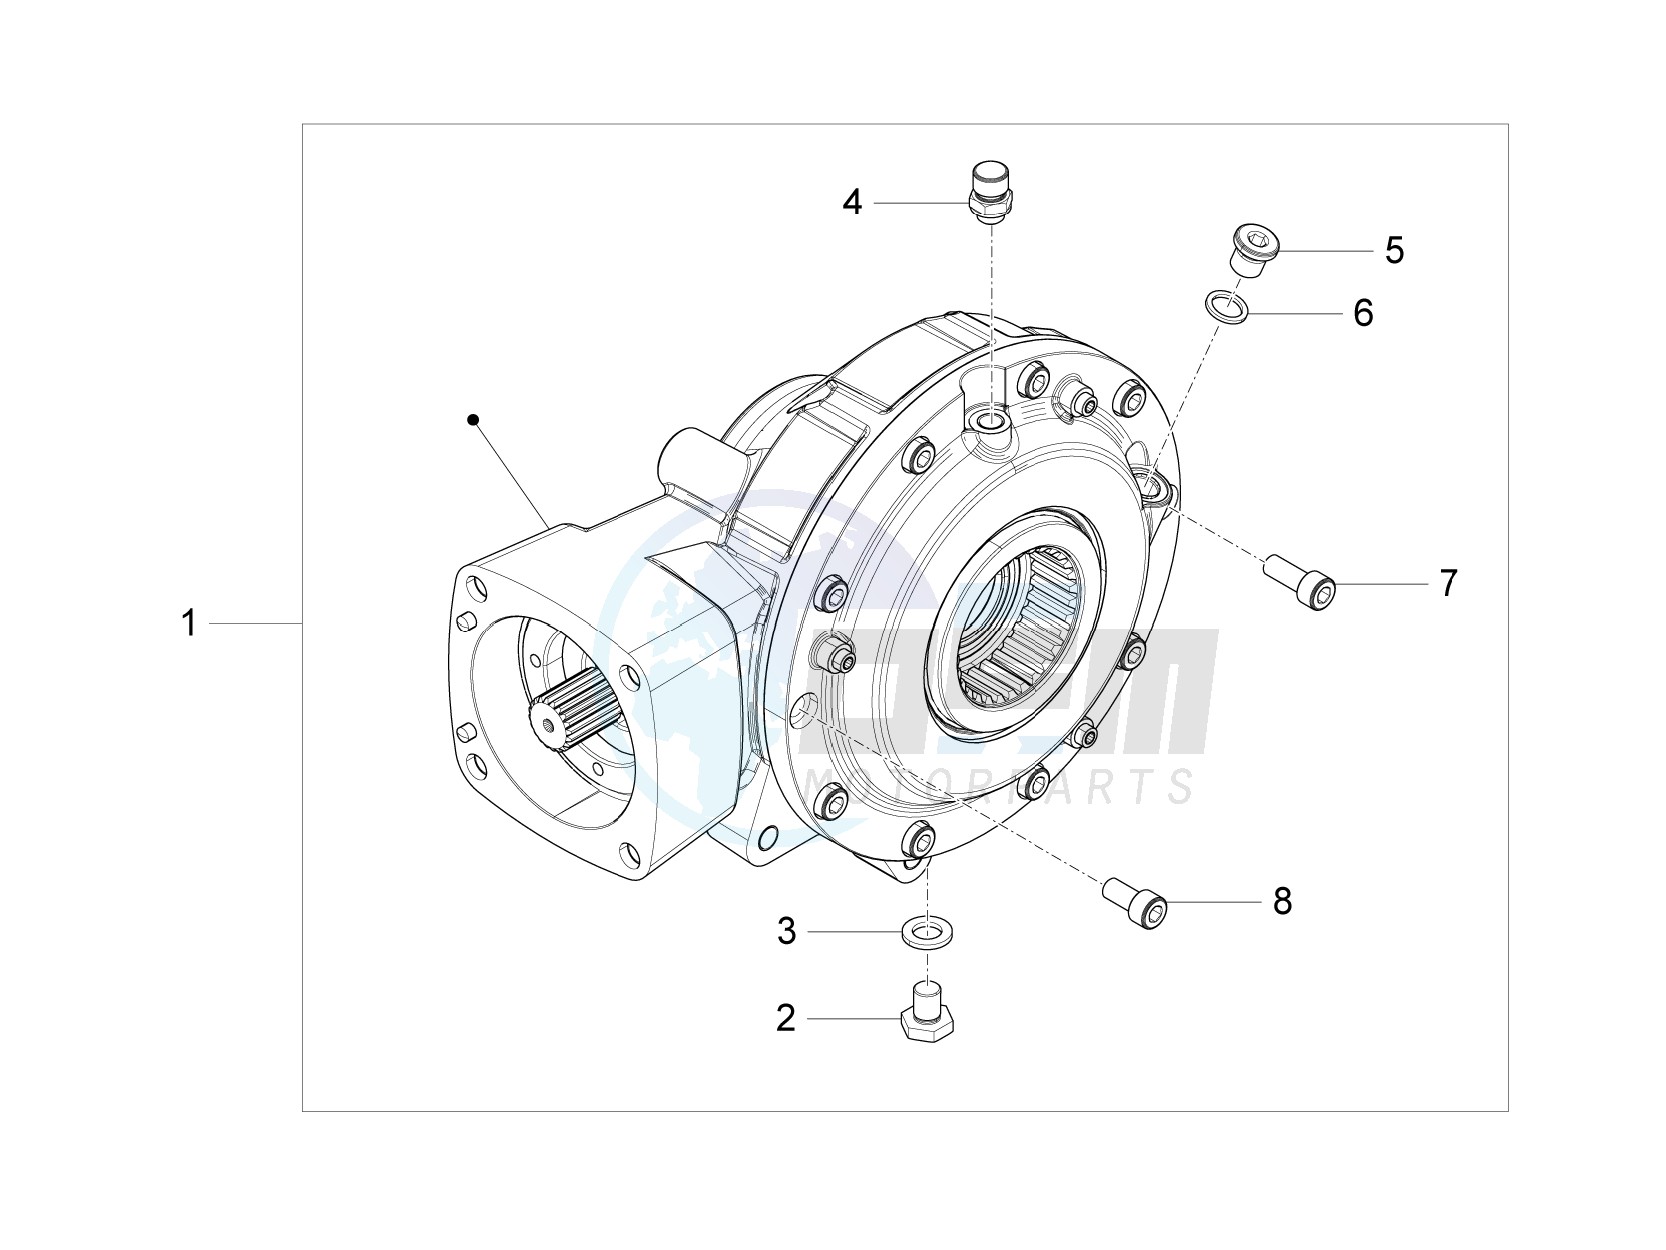 Rear transmission / Components blueprint